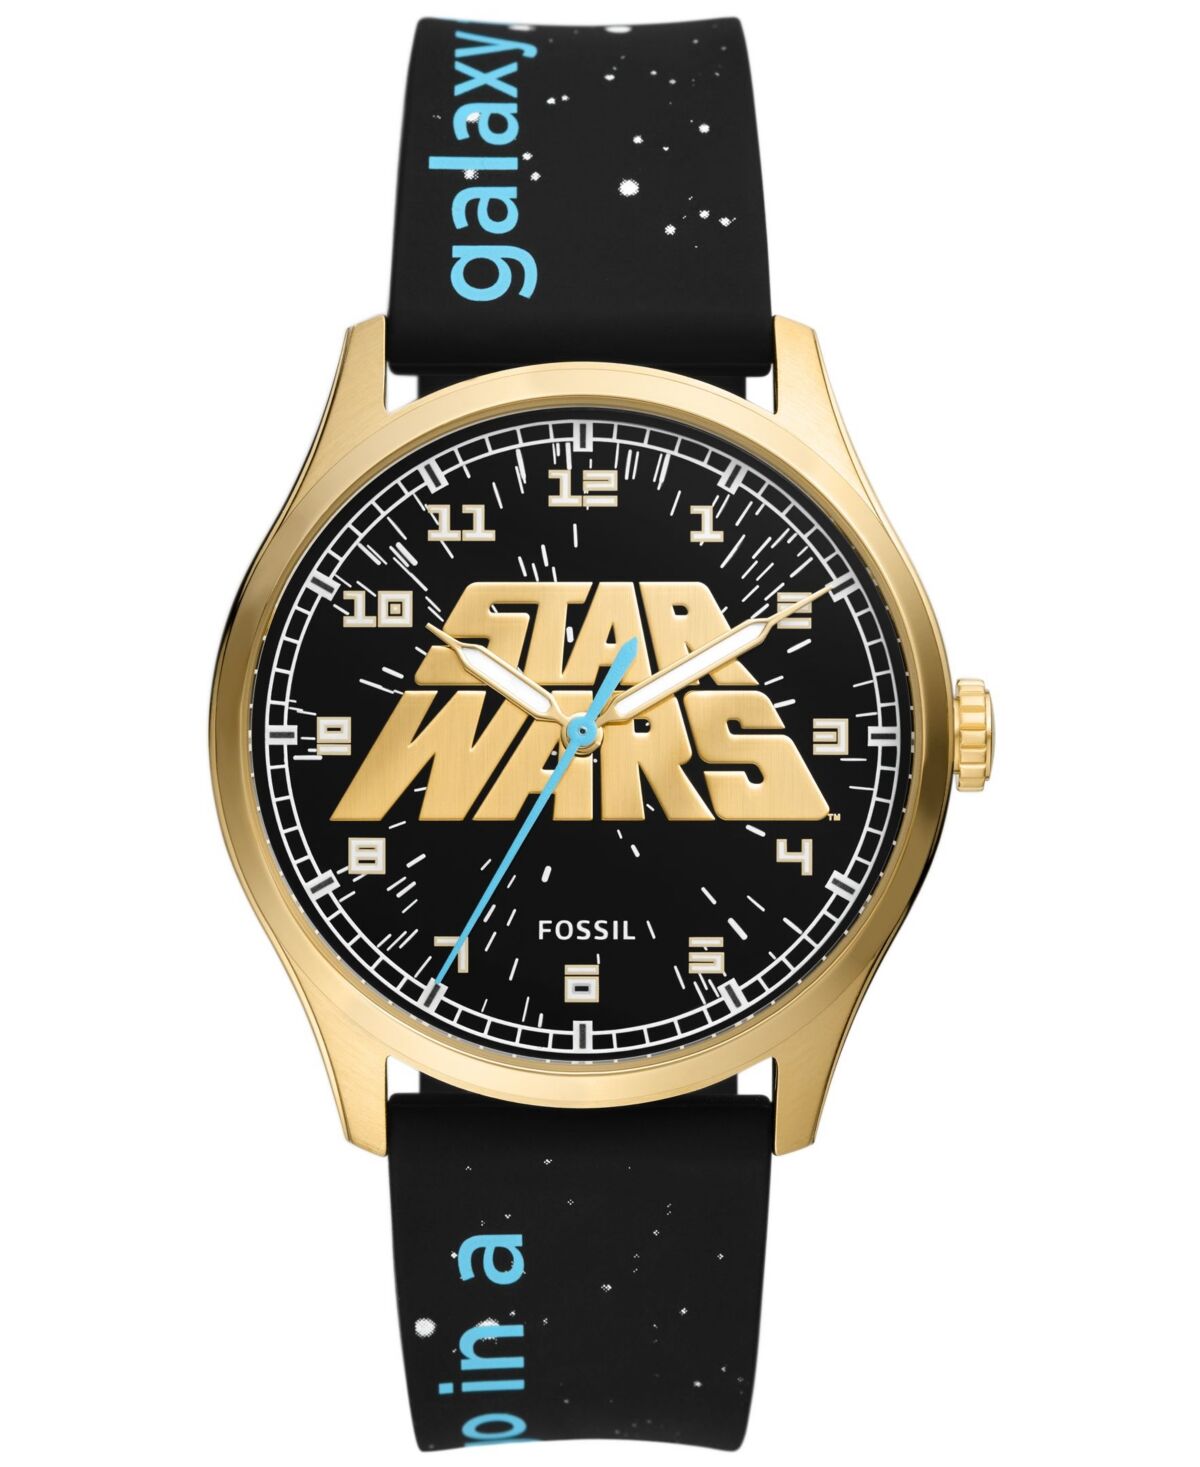 Fossil Unisex Special Edition Star Wars Three-Hand Black Silicone Watch, 42mm - Black